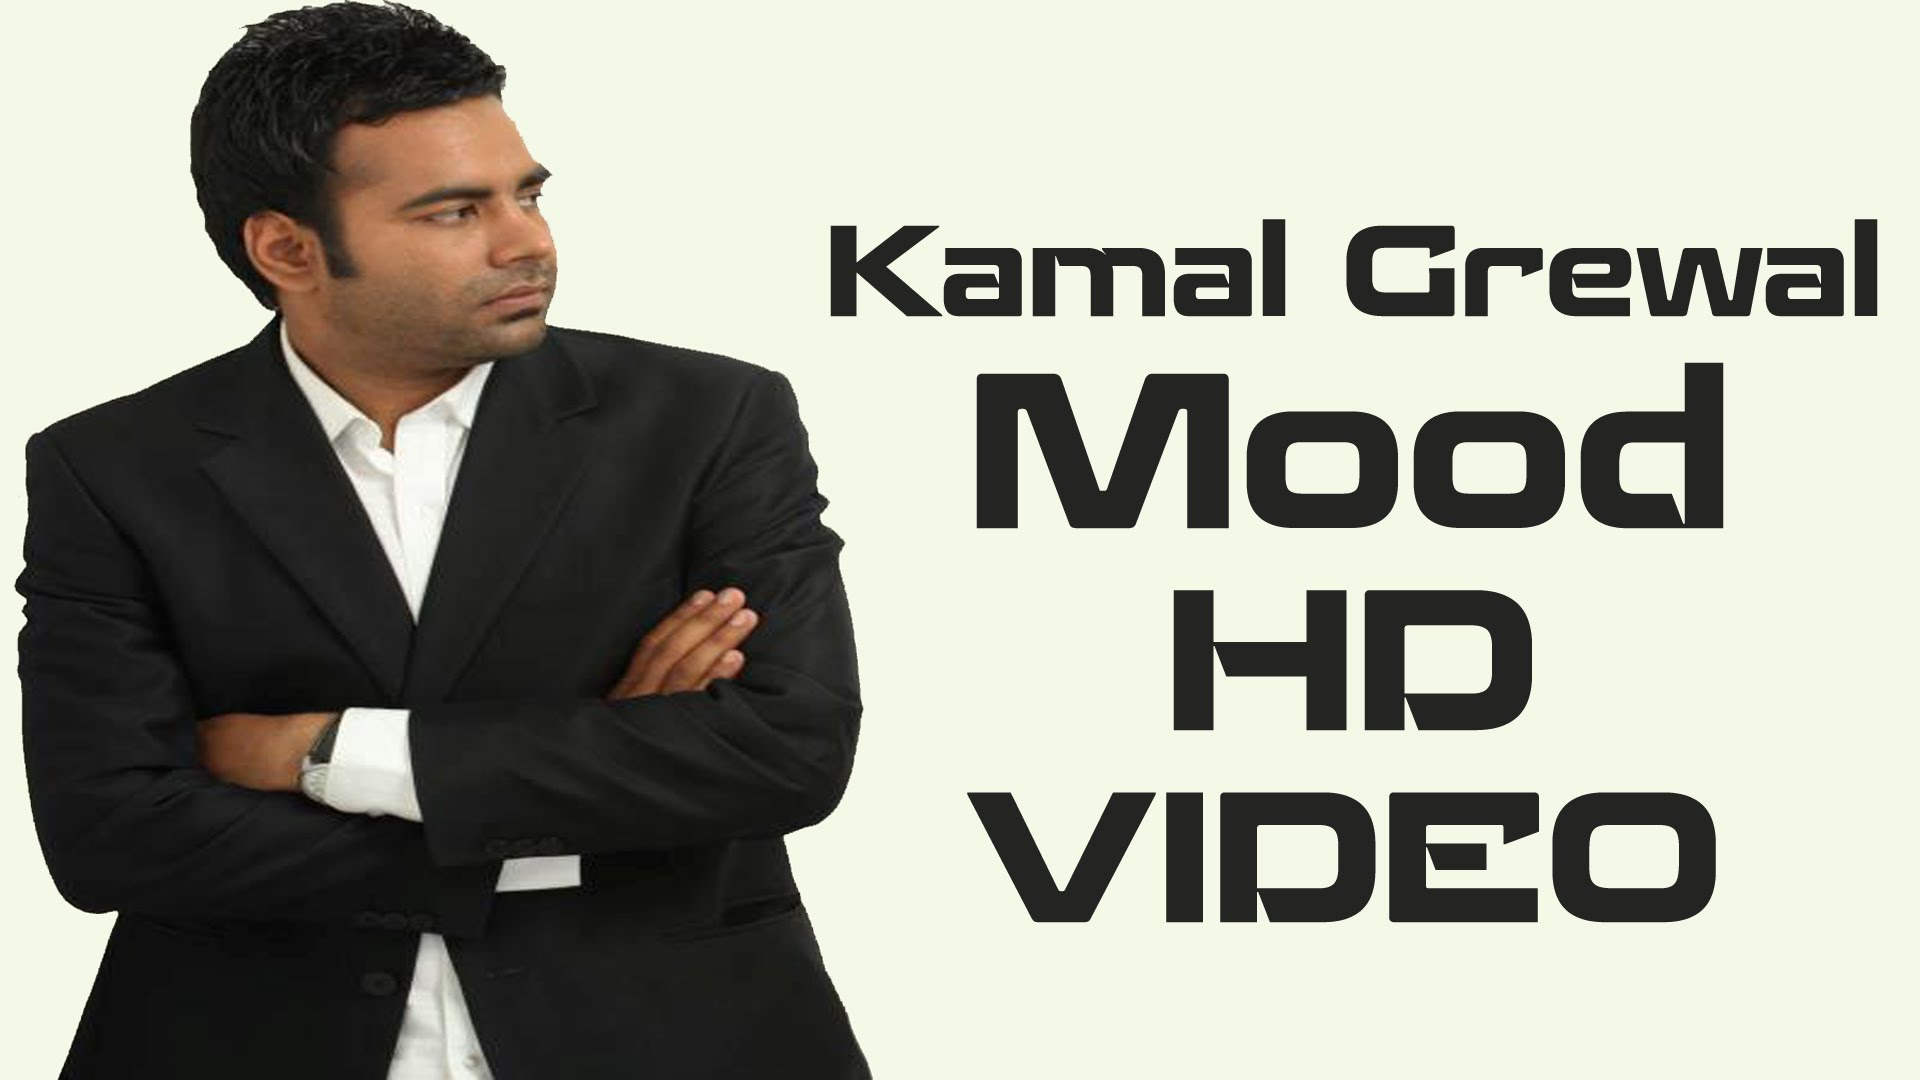 Image Of Kamal Grewal